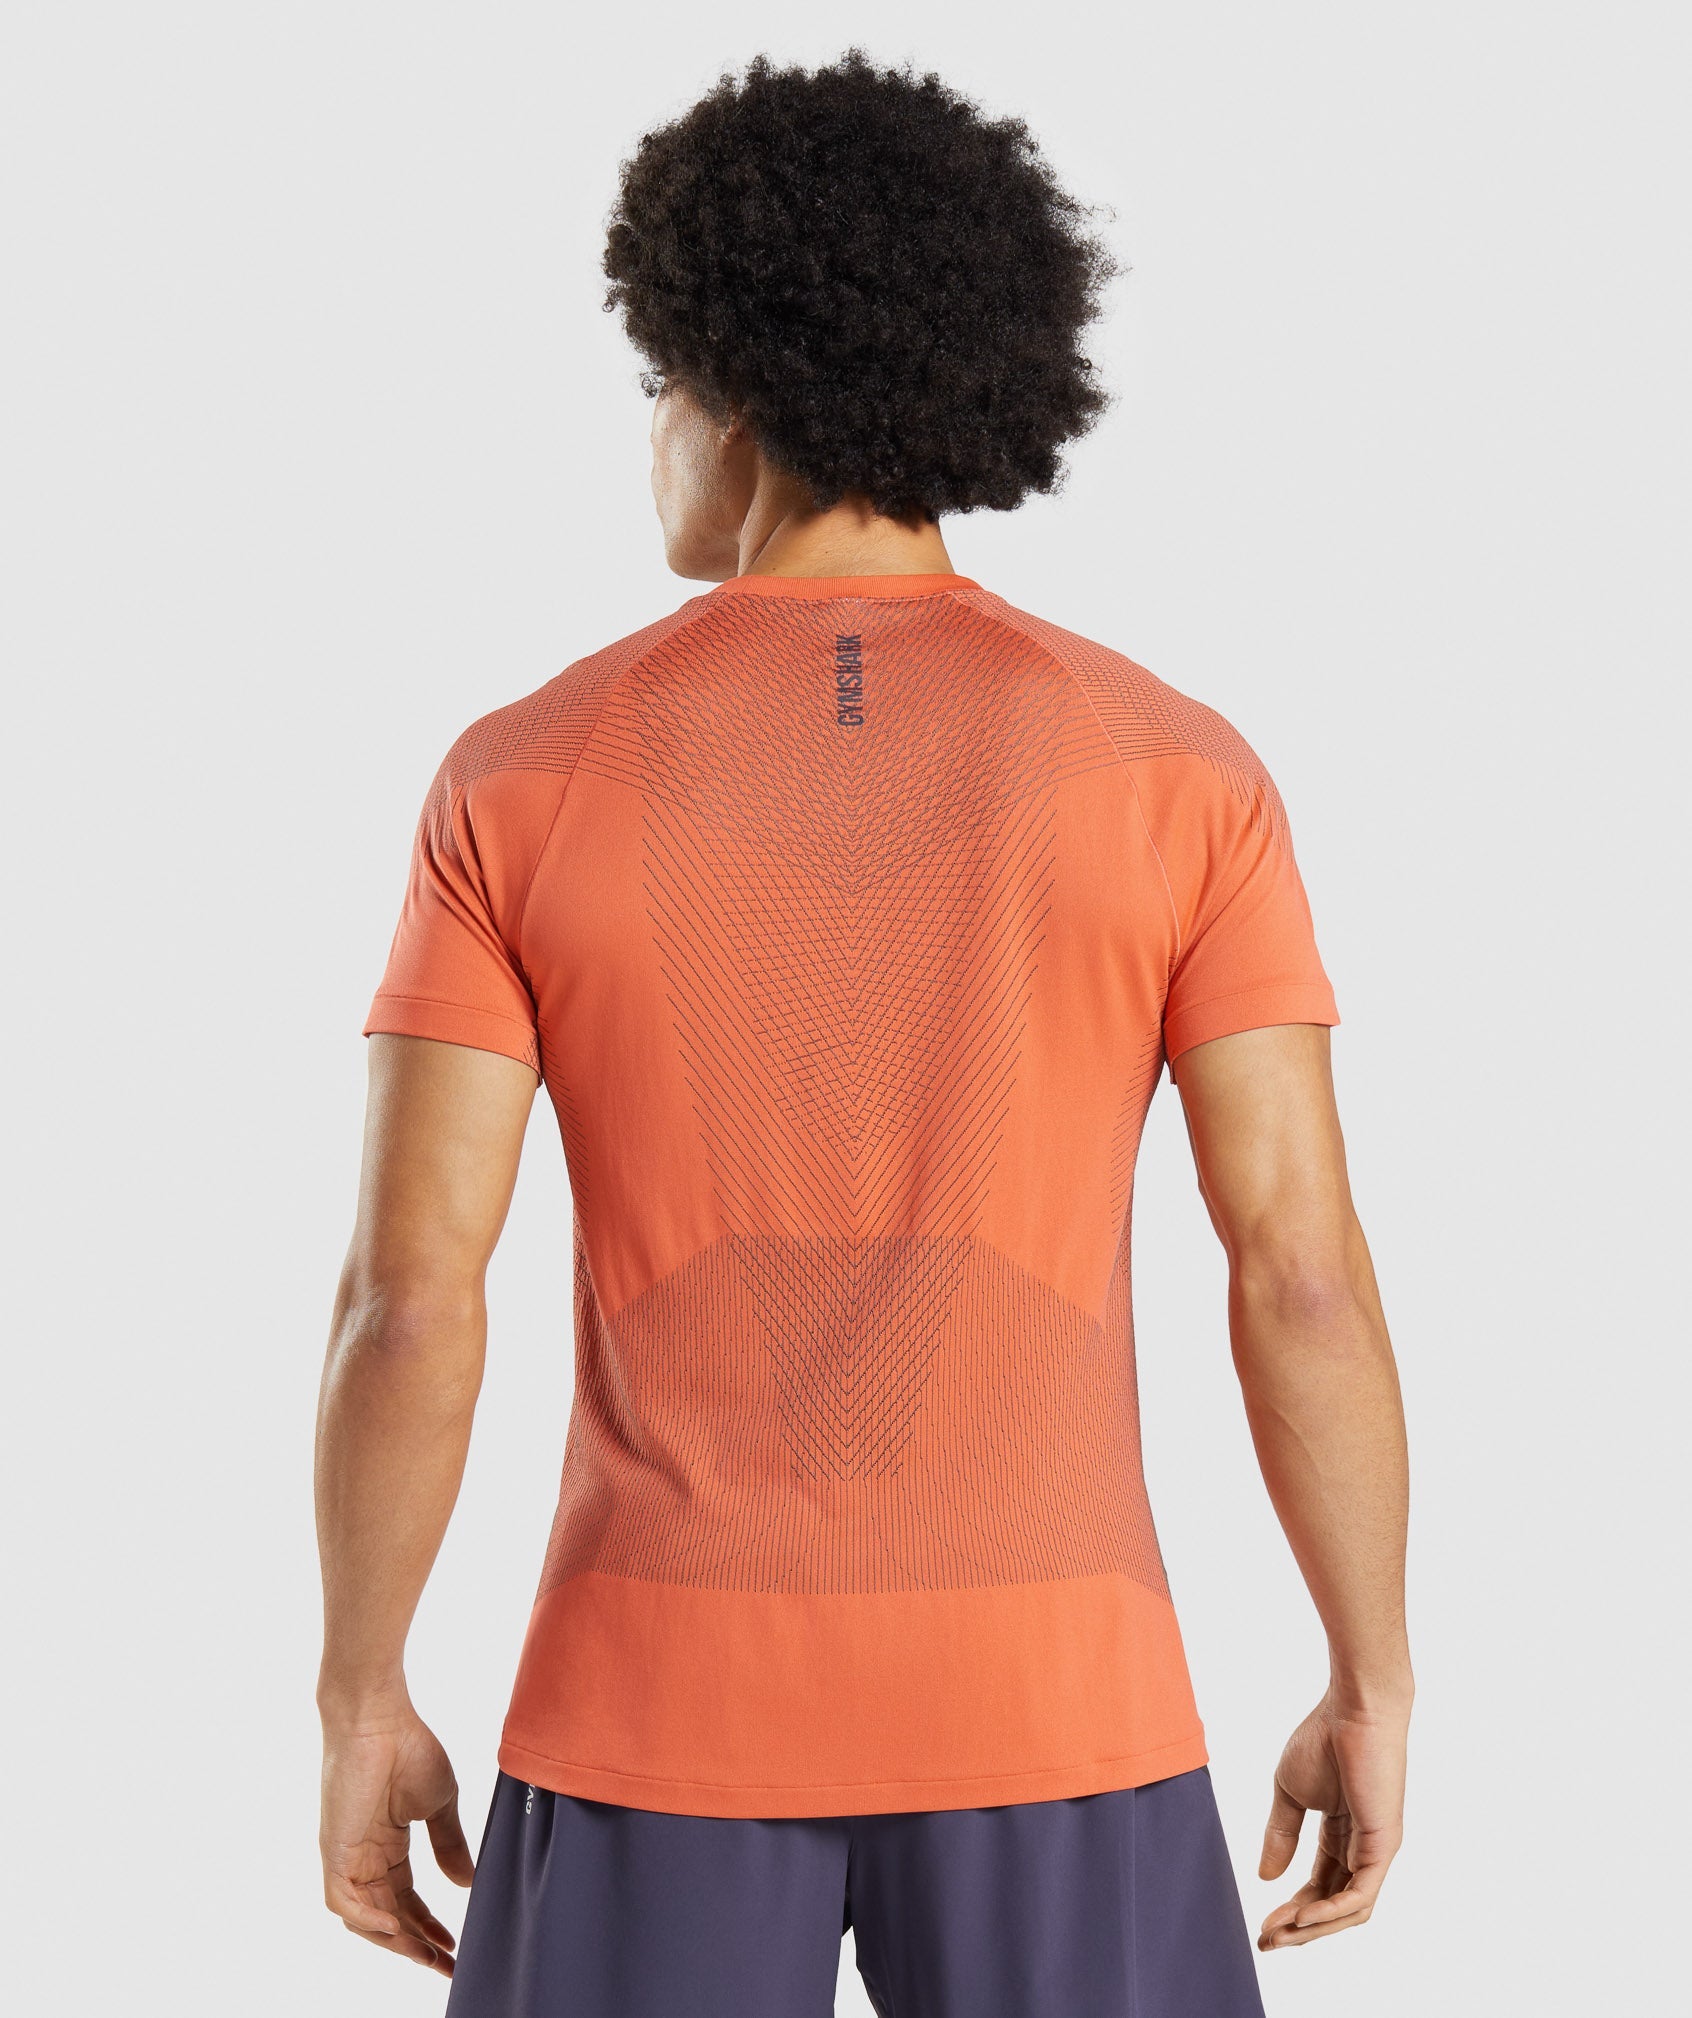 Apex Seamless T-Shirt in Papaya Orange/Onyx Grey - view 2